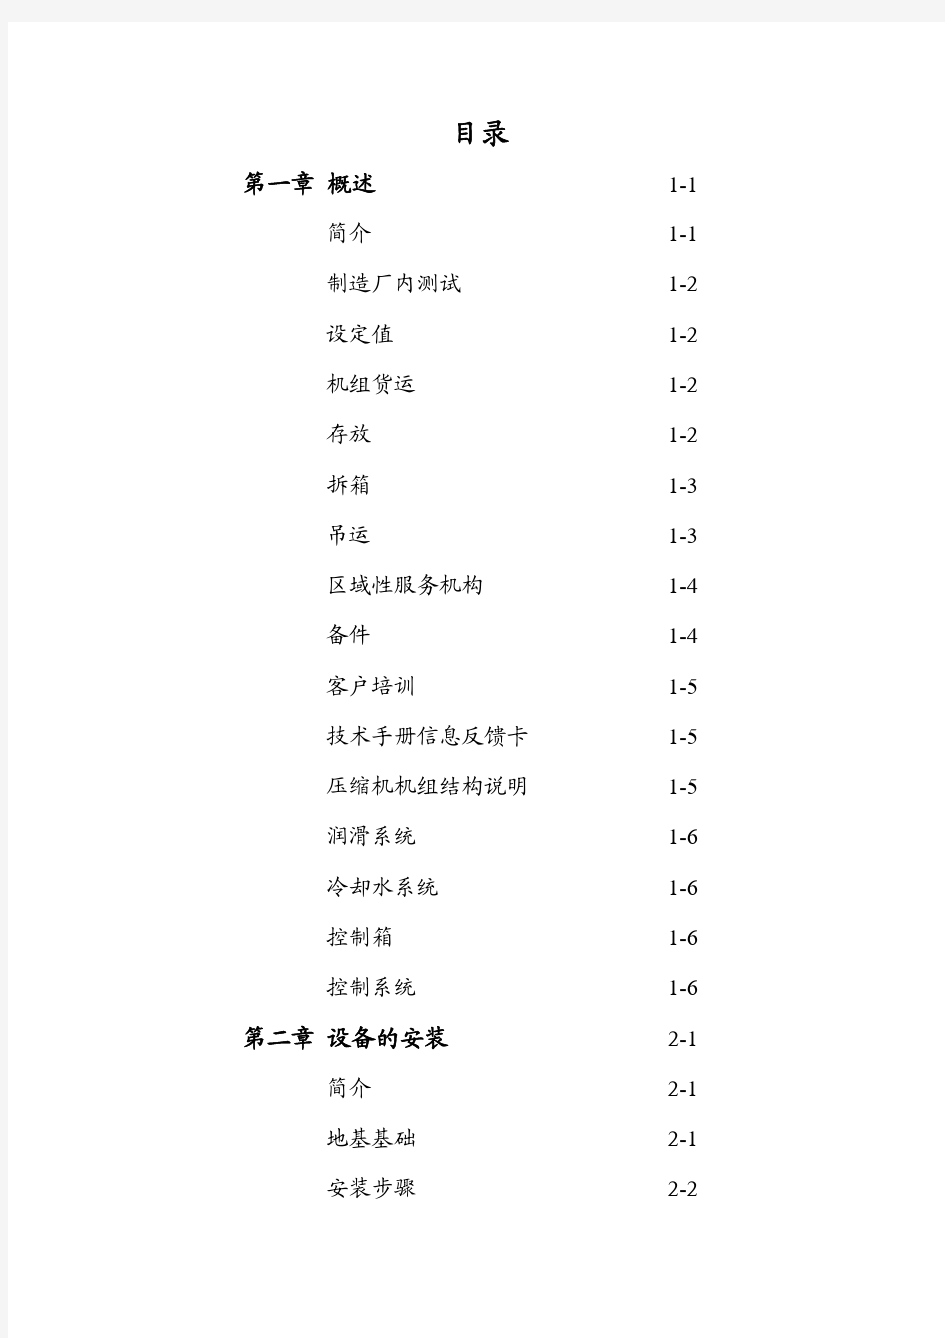 ELLIOTT__压缩机中文技术手册